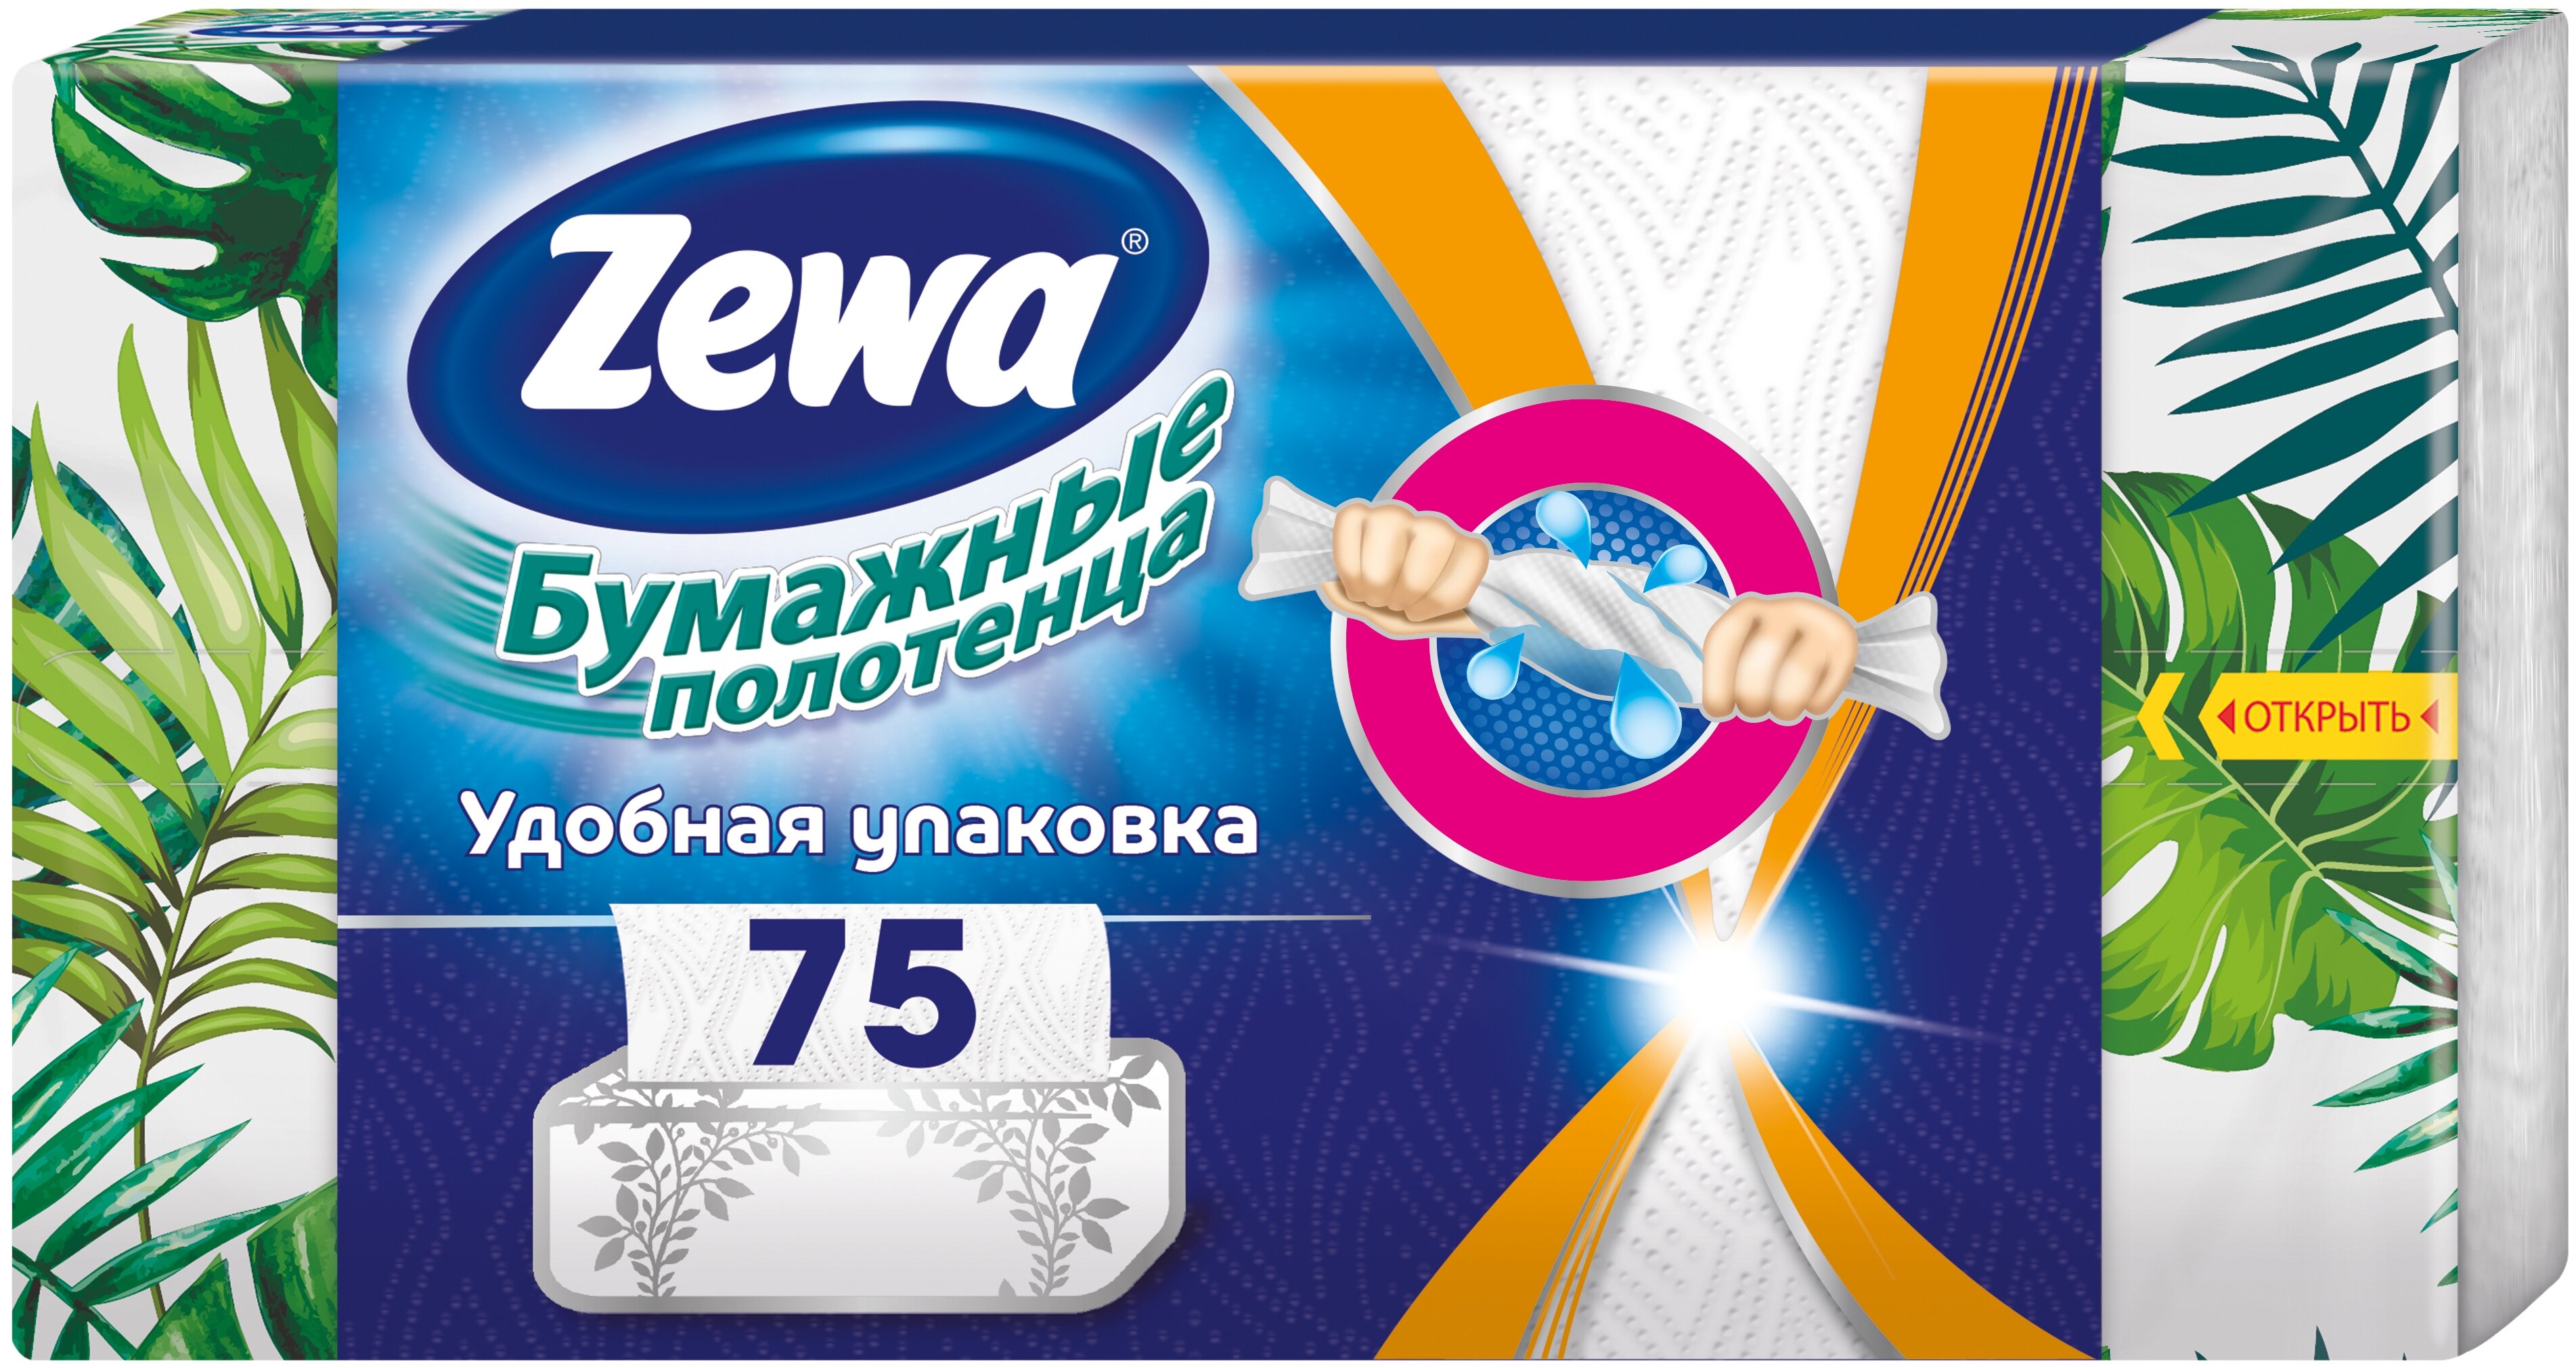 Zewa Wish&Weg "Удобная упаковка" - количество слоев: 2